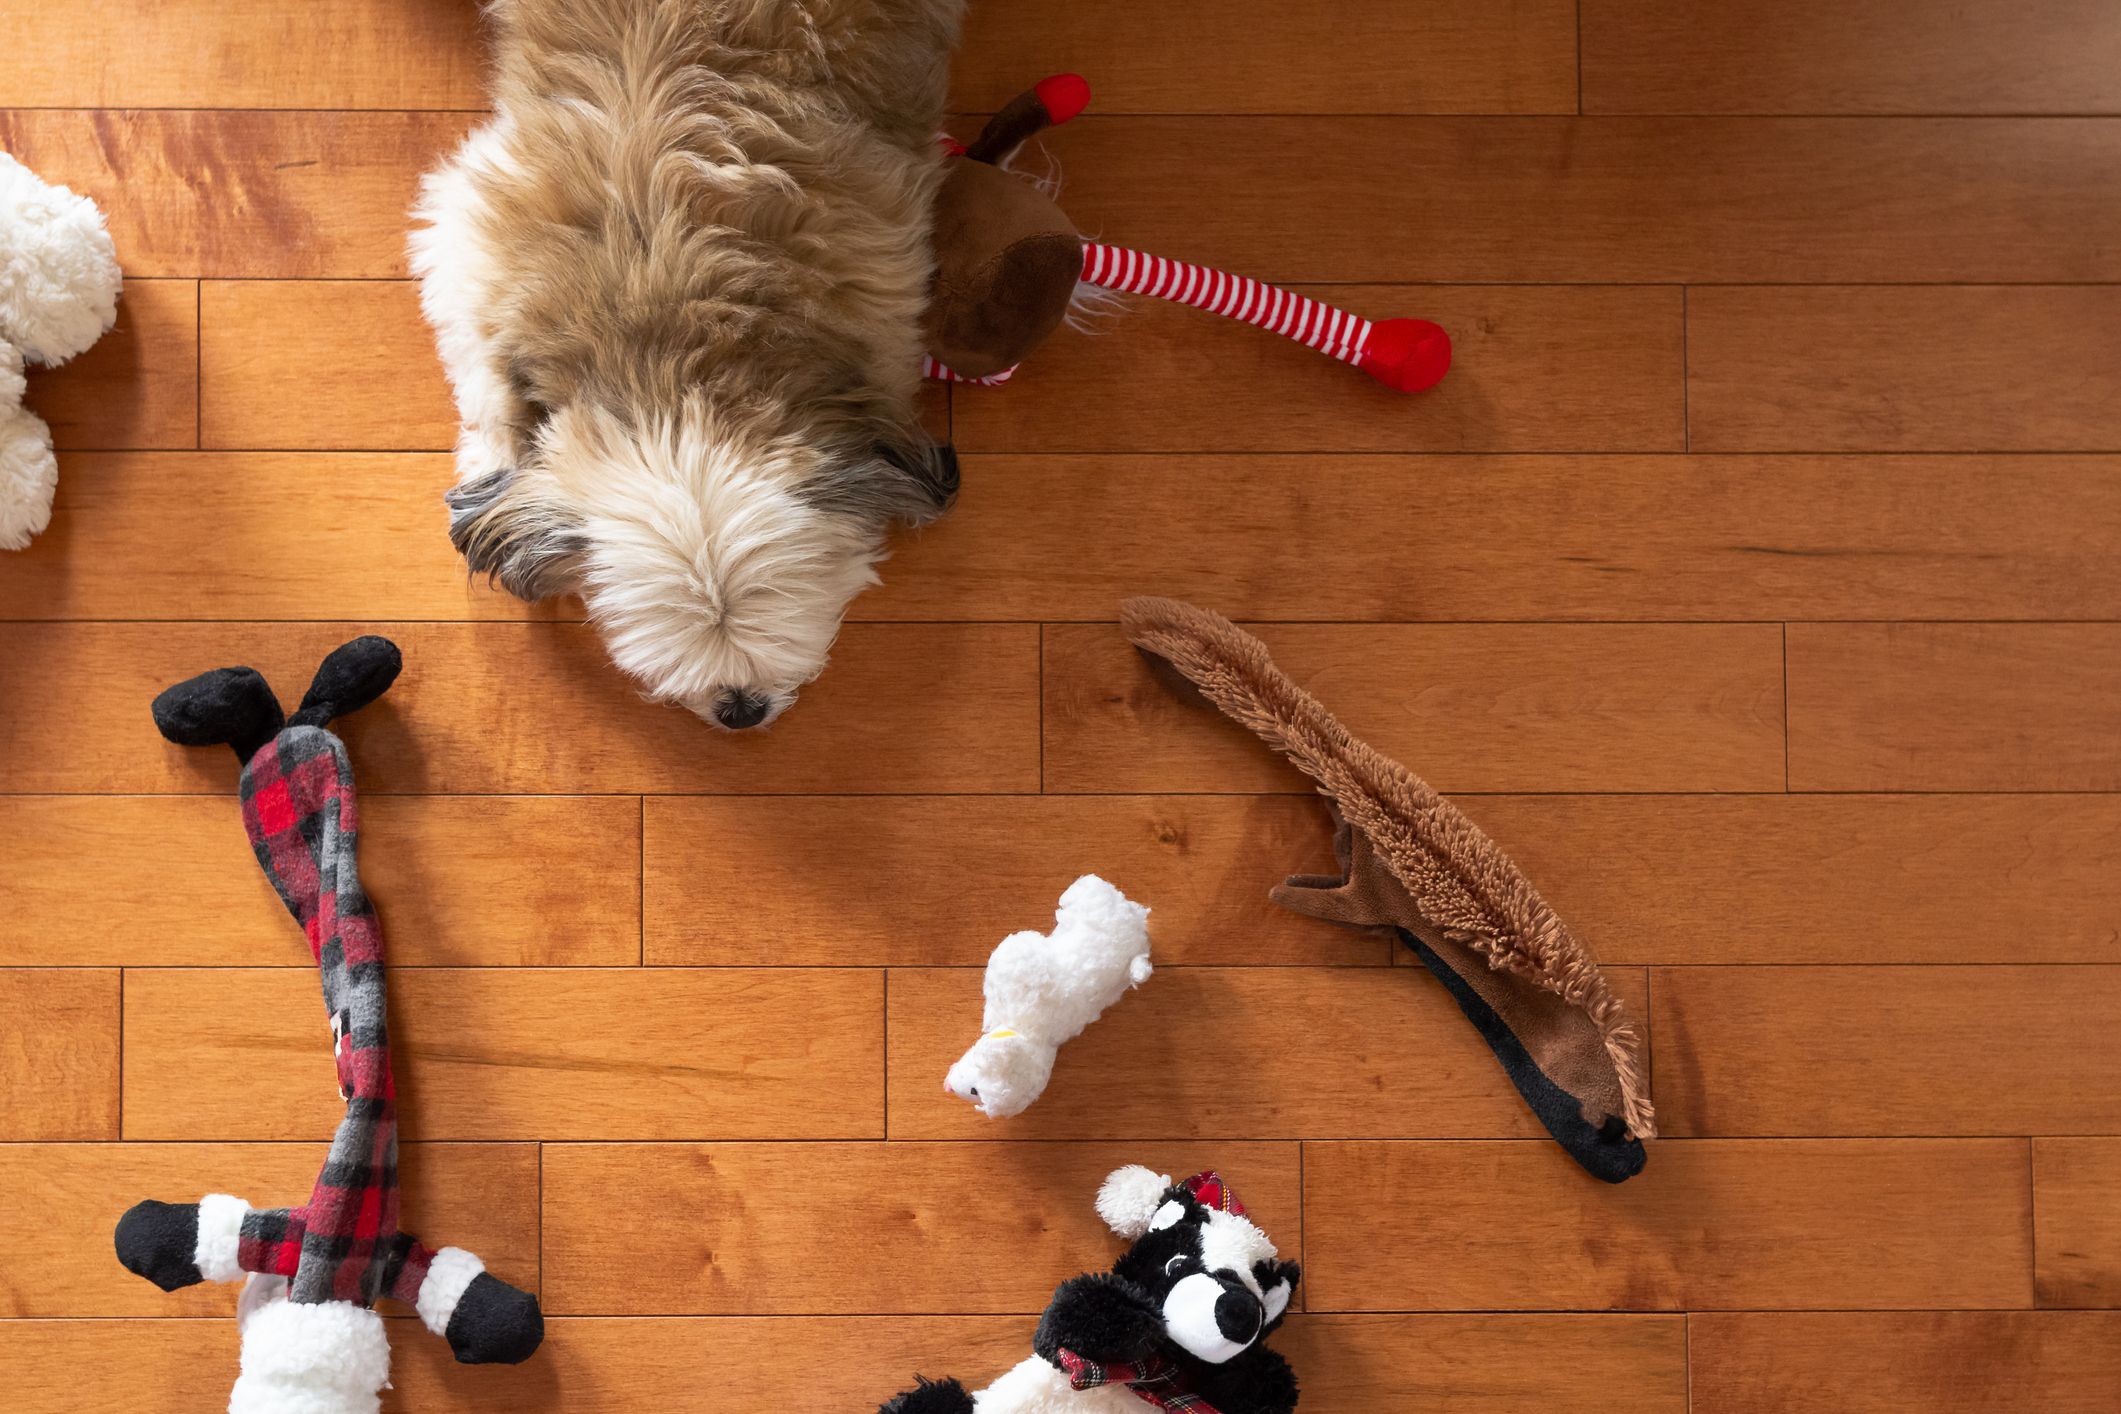 Indoor Activities For Your Dog